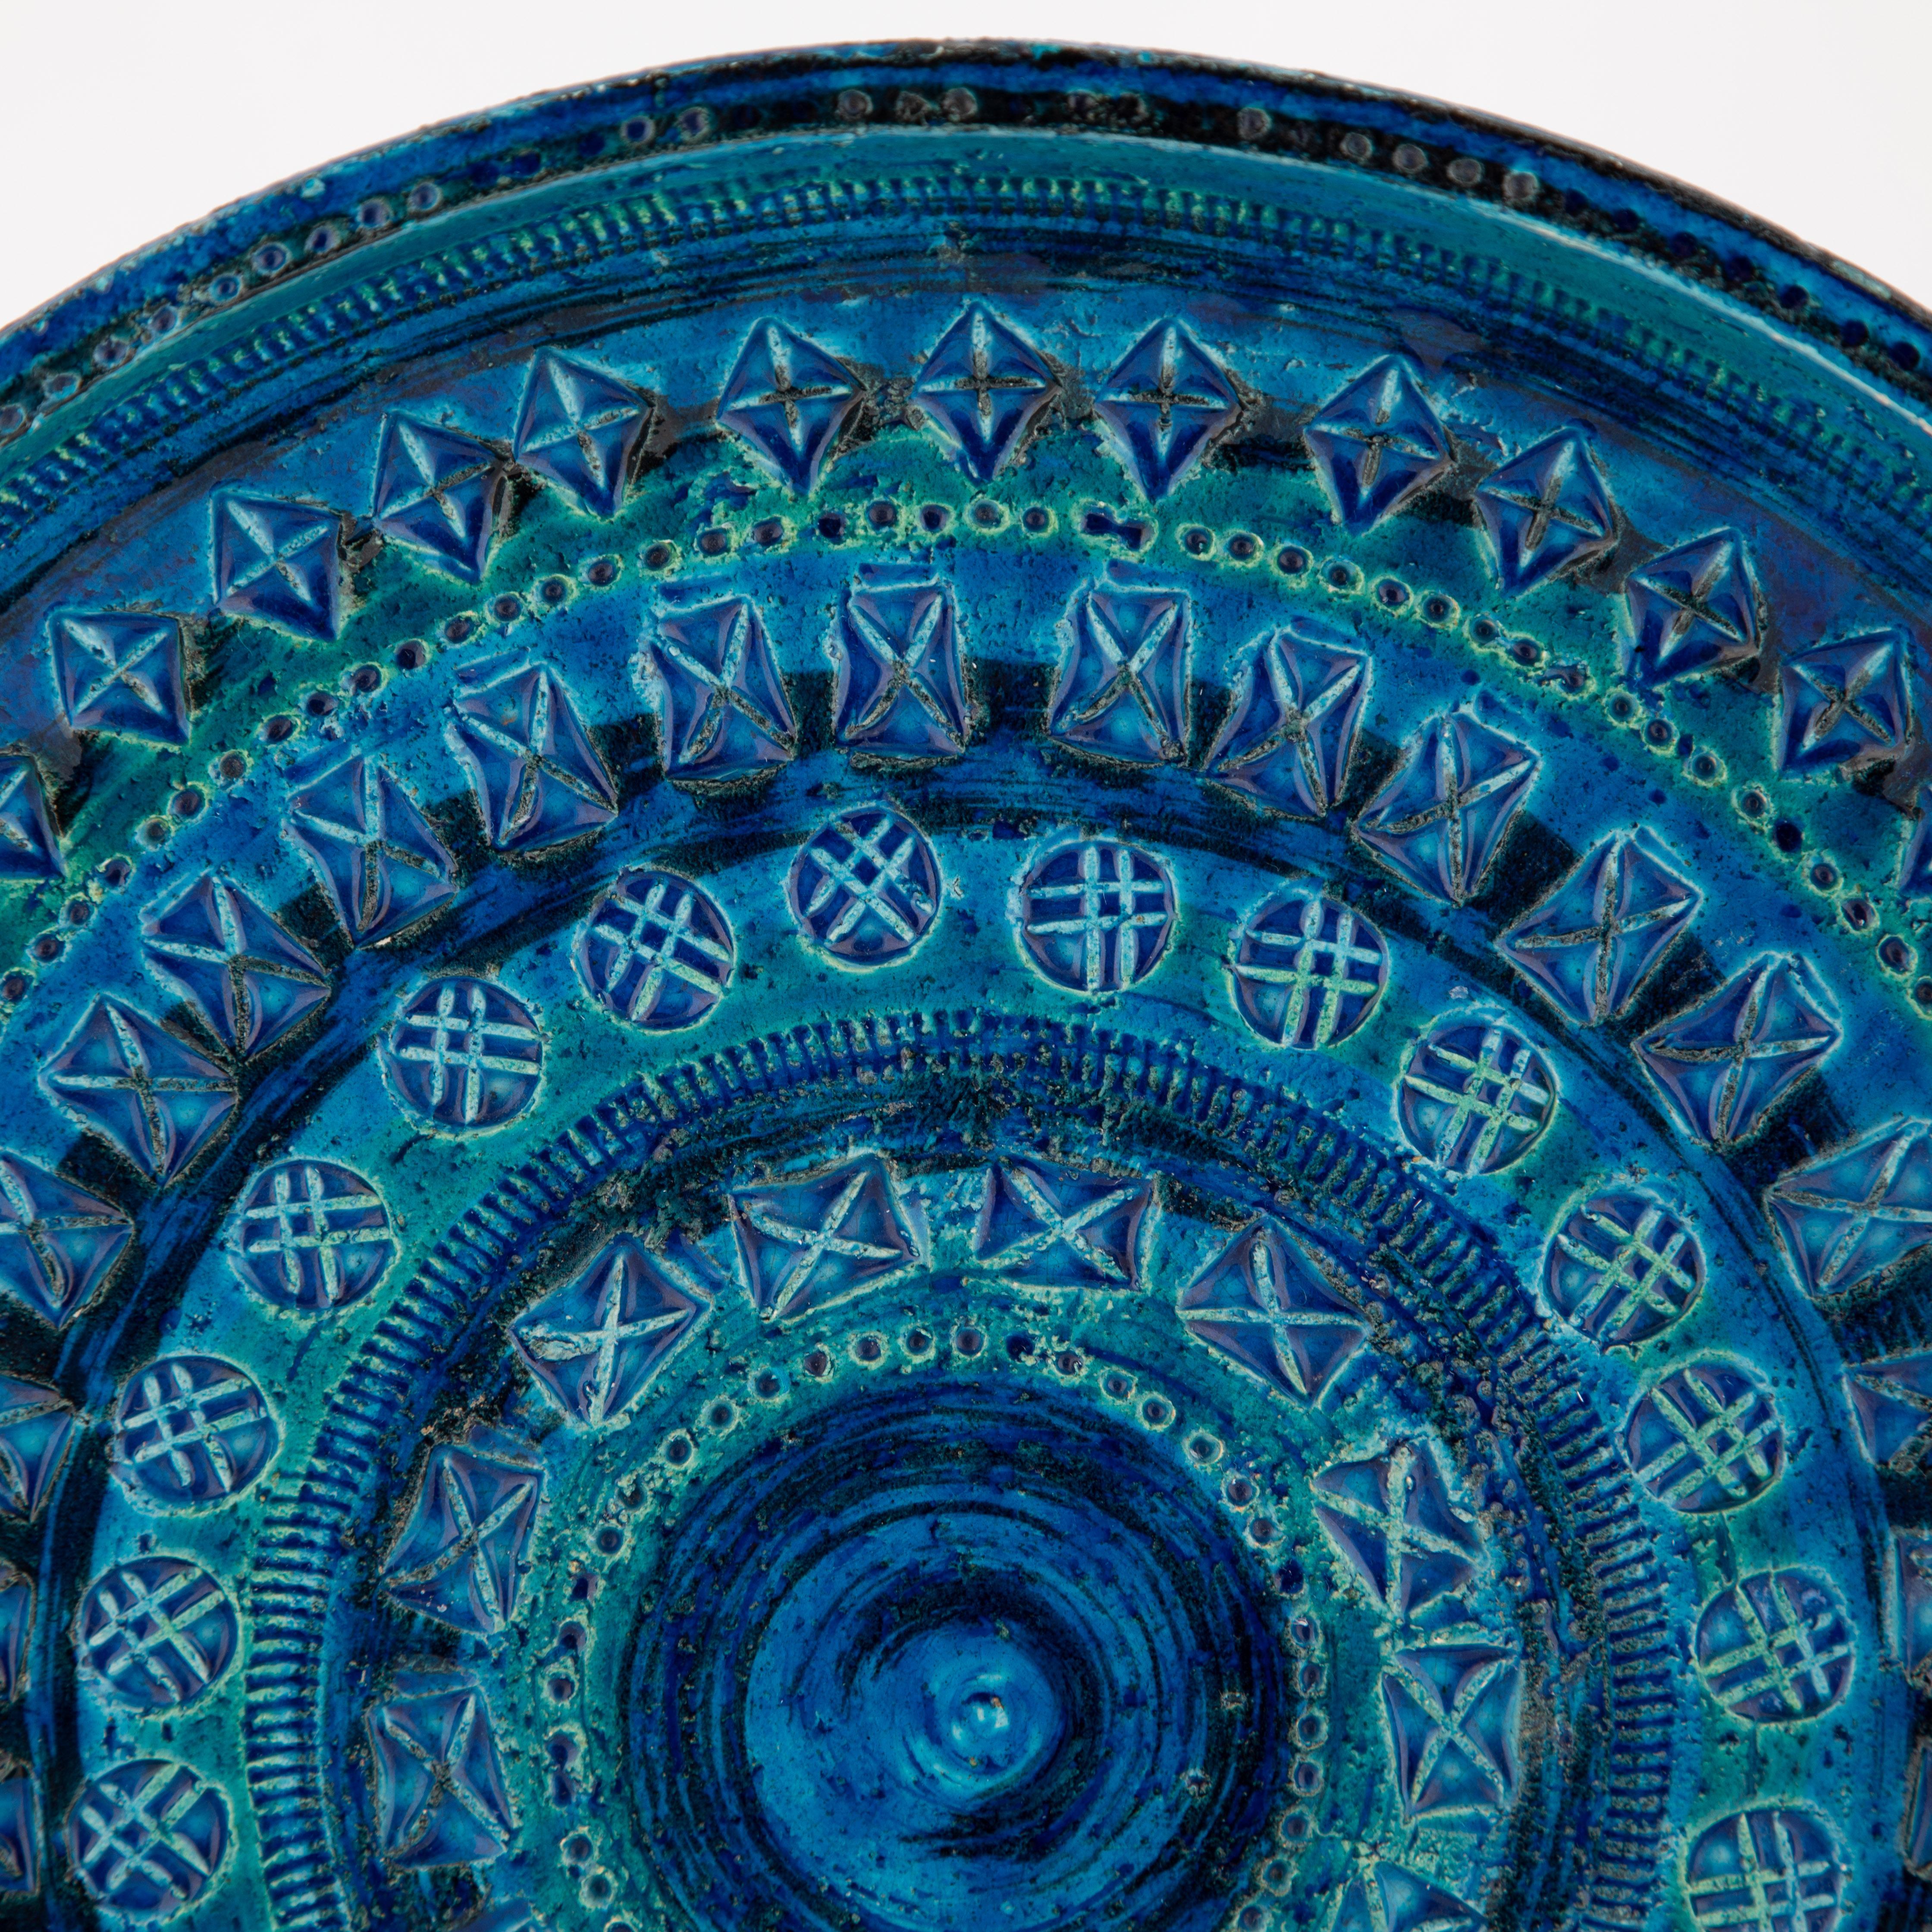 Blue ceramic centrepiece bowl or platter from Aldo Londi's iconic 